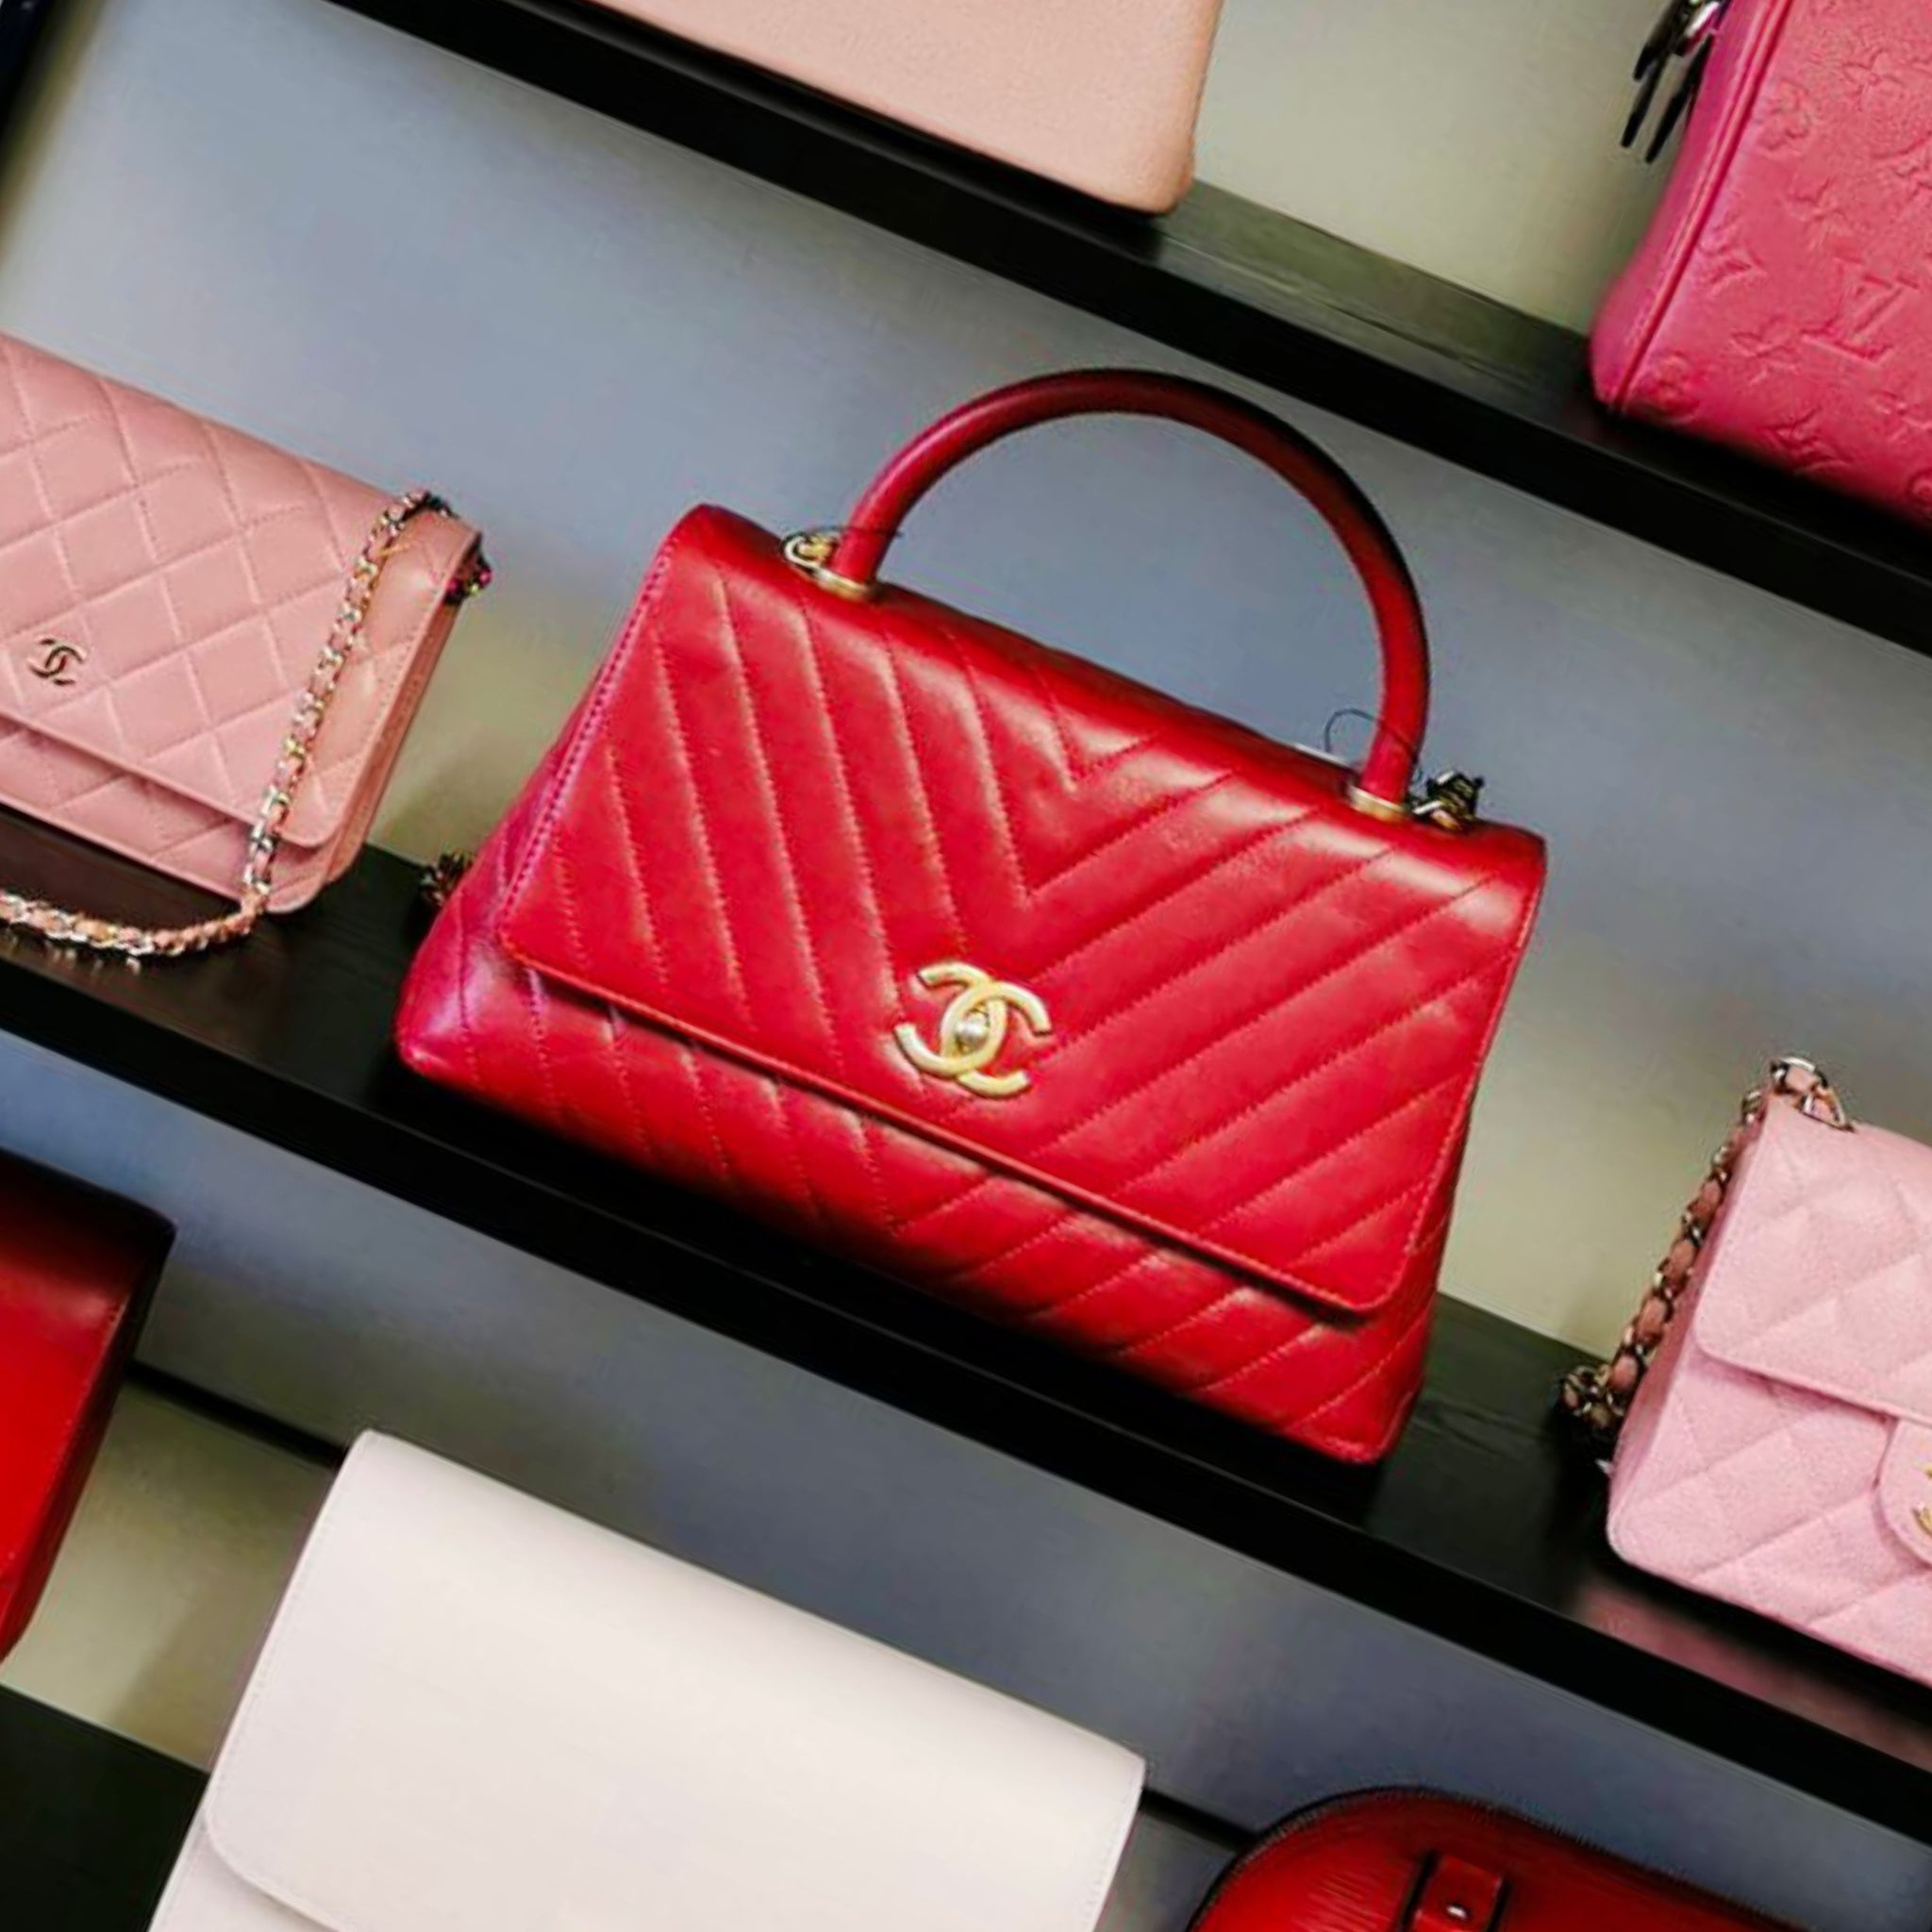 Celine: Iconic handbags through the centuries